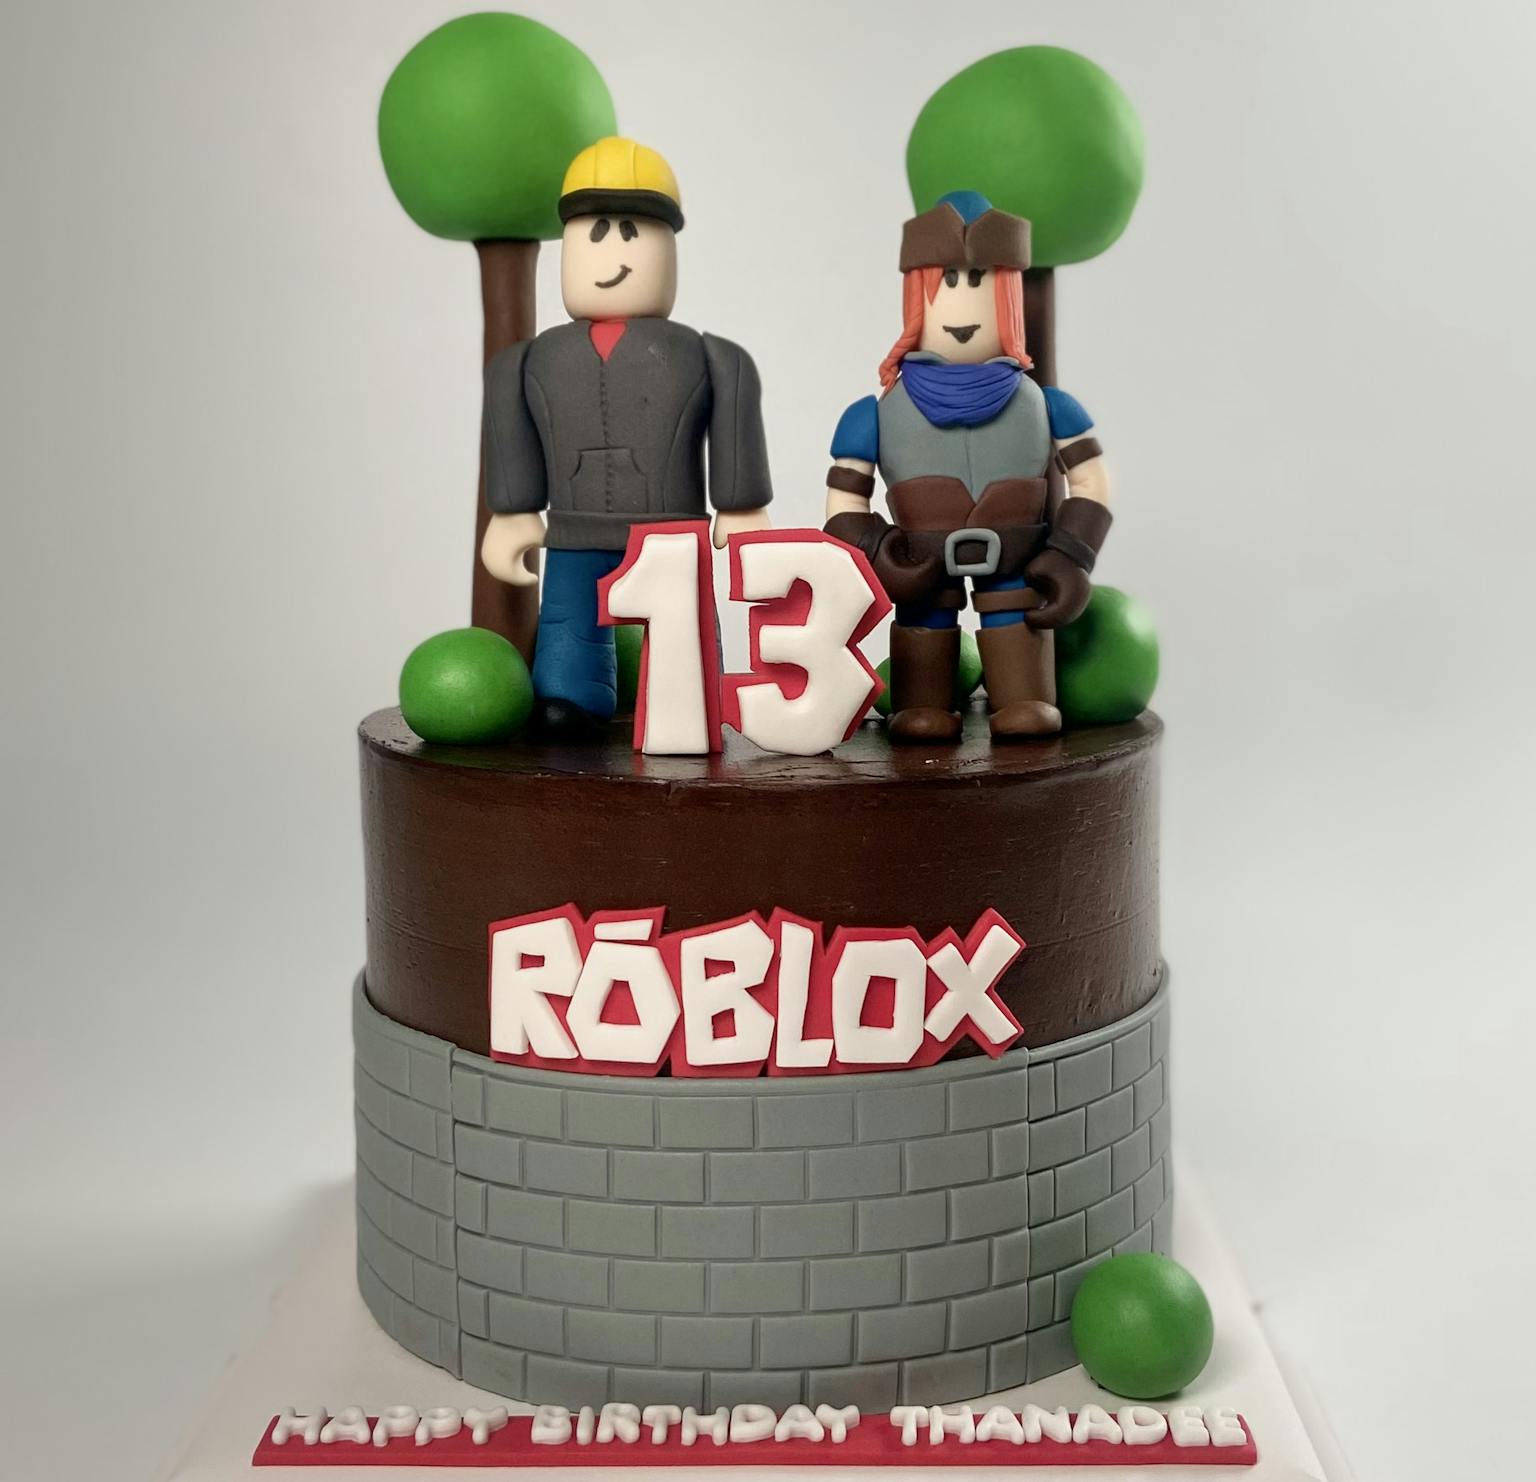 100% edible fondant sculpted Roblox birthday cake